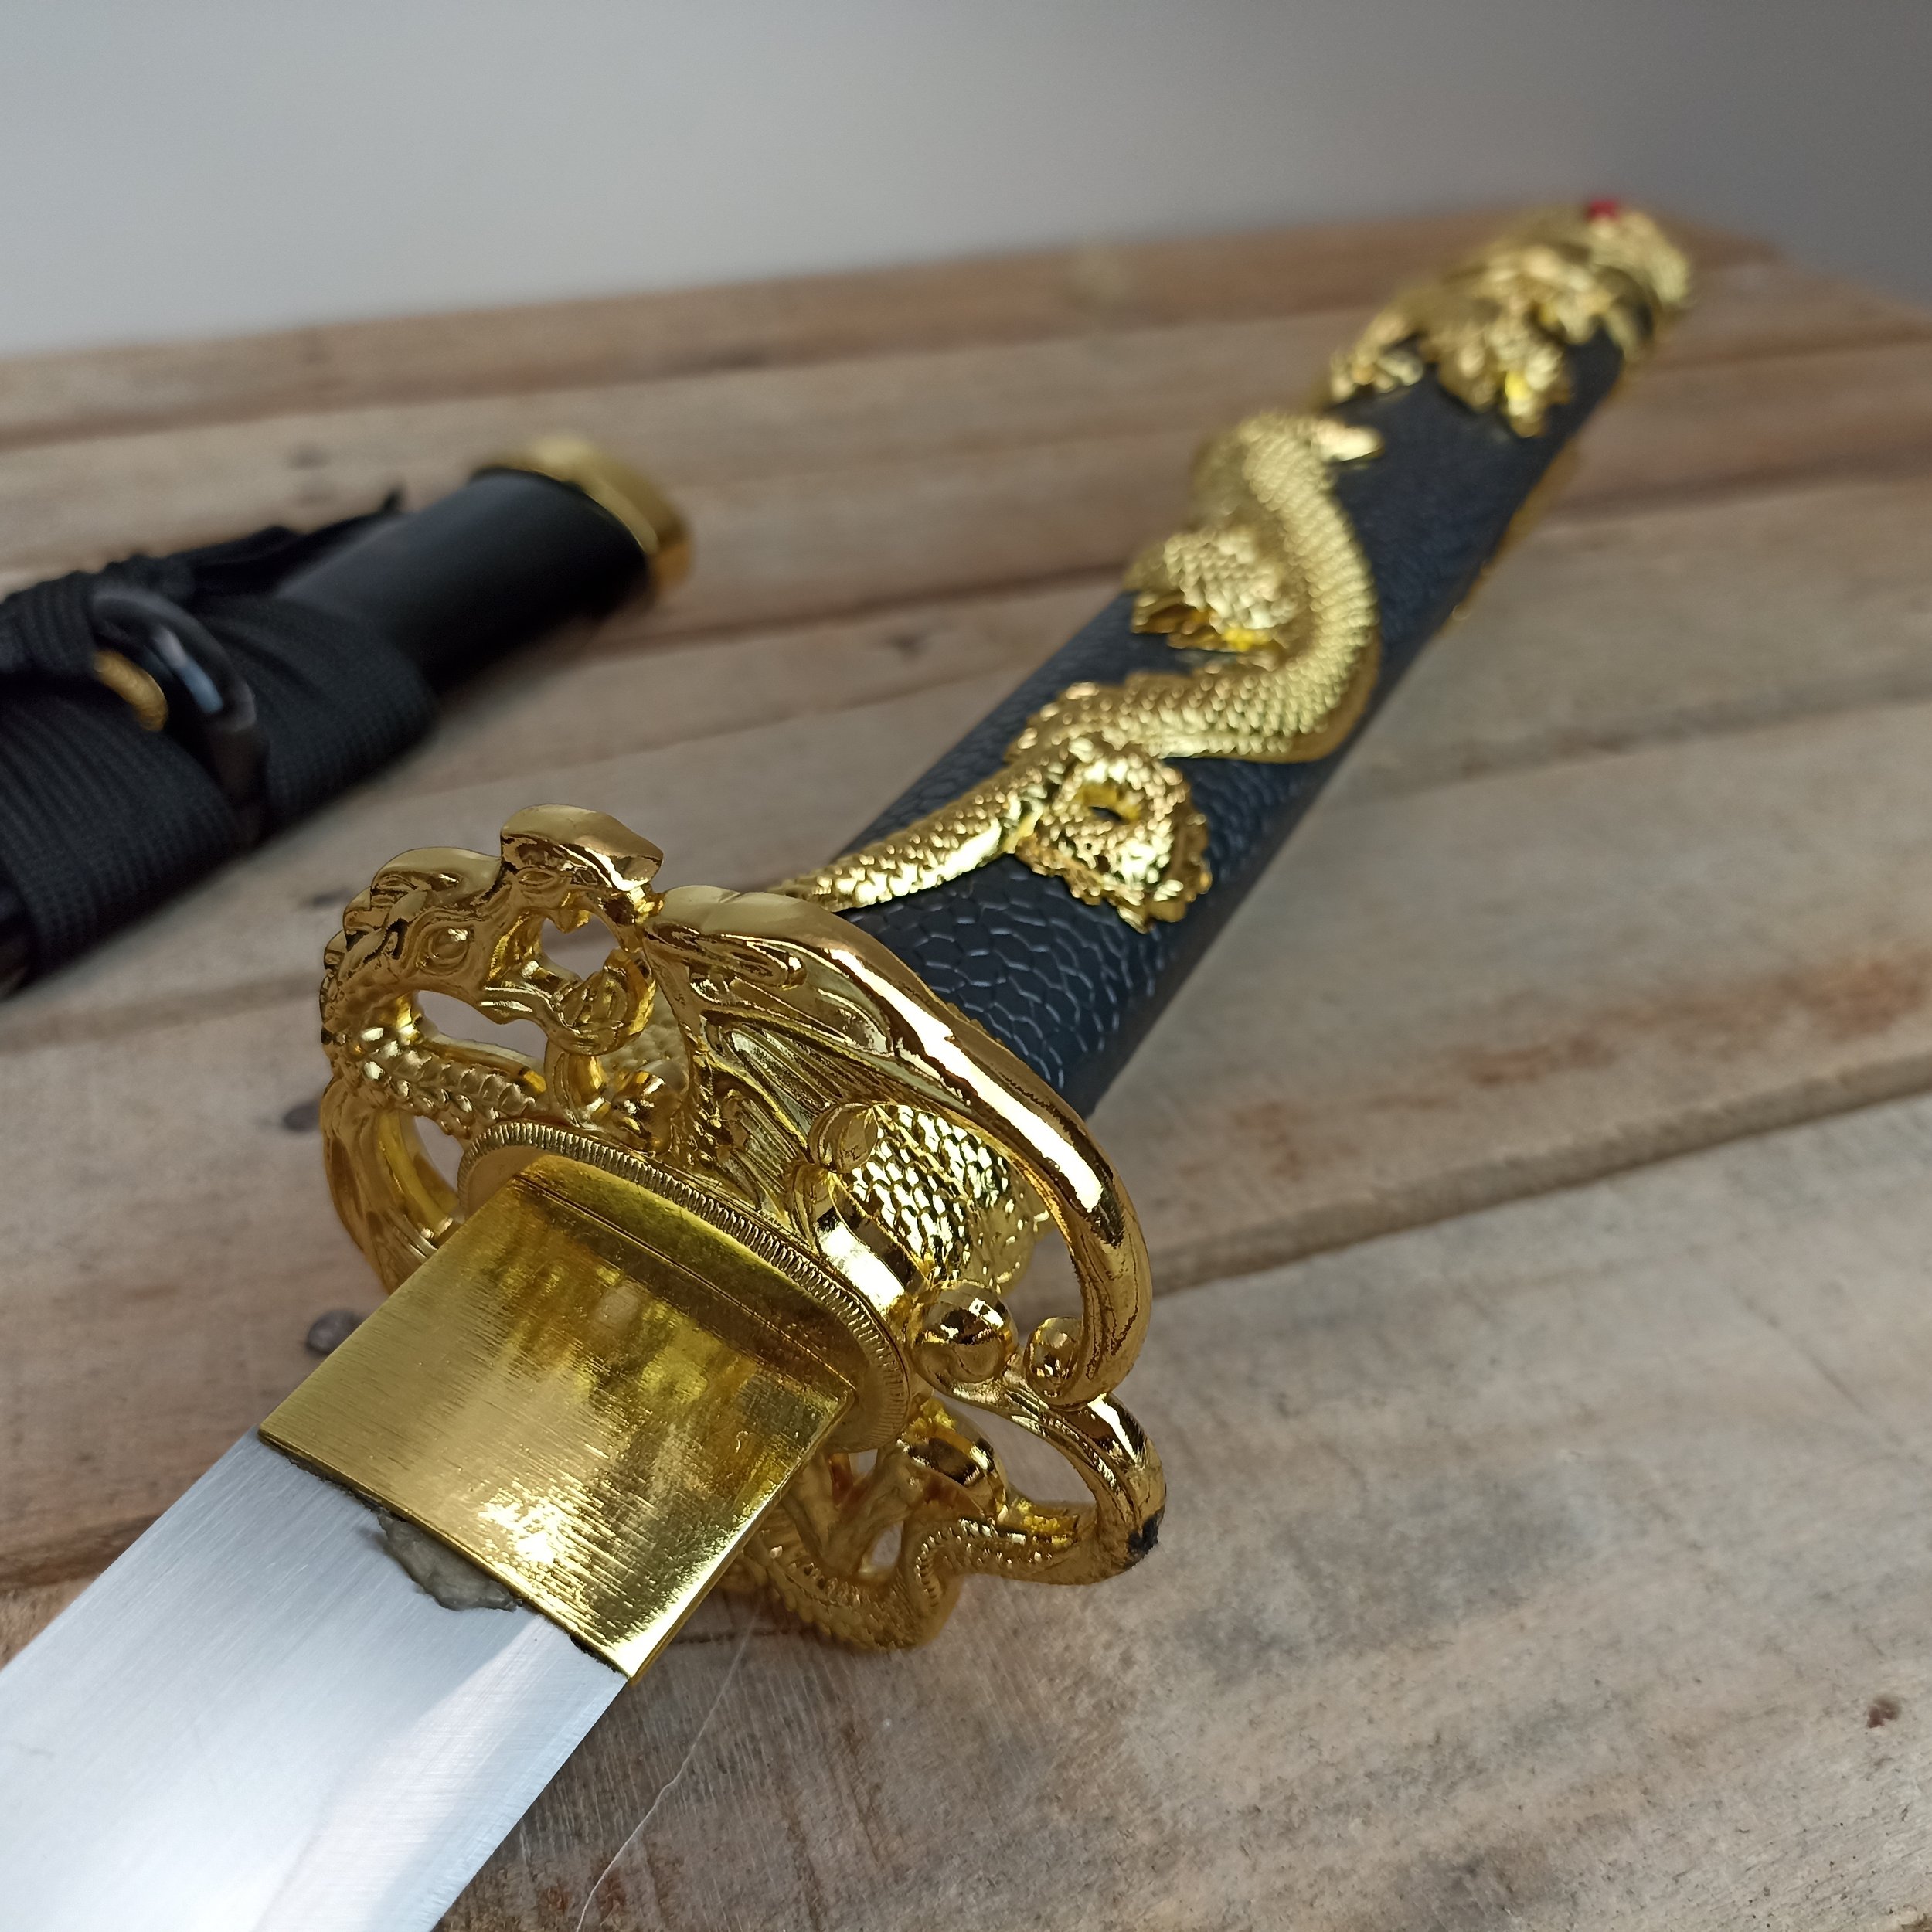  fengze - Espada samurái hecha a mano, 40 pulgadas, acero de  damasco, ultra afilada, espiga completa, barro templado, katana totalmente  forjada a mano para batalla real : Deportes y Actividades al